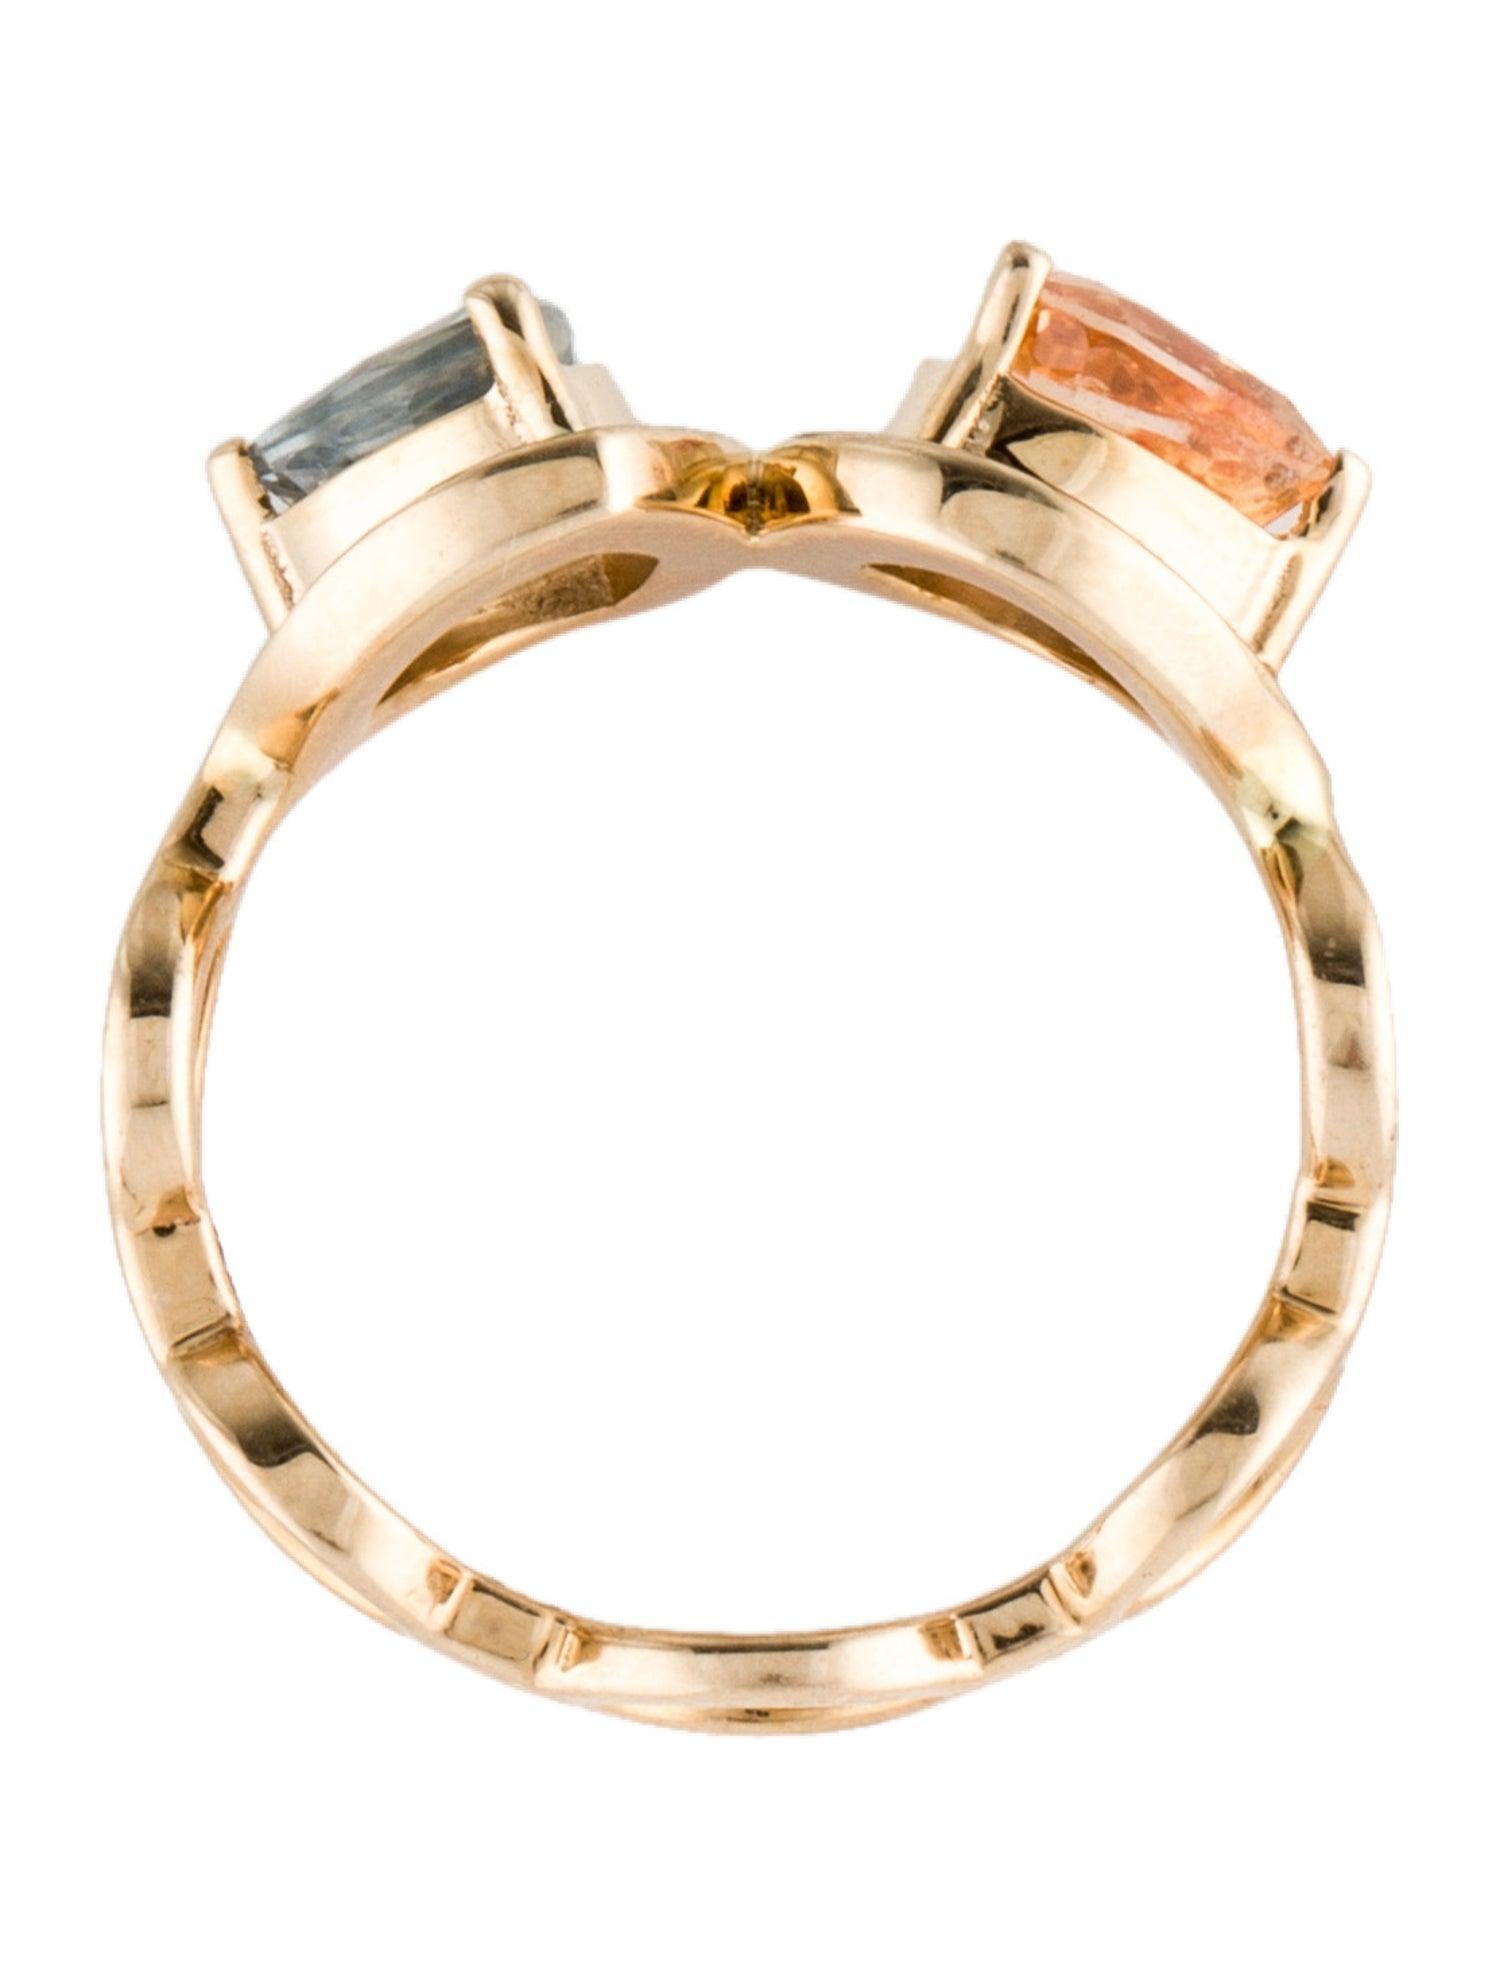 Women's Unique 14K Yellow Gold, Sapphire & Enamel Cocktail Ring - Pear & Triangular Cut